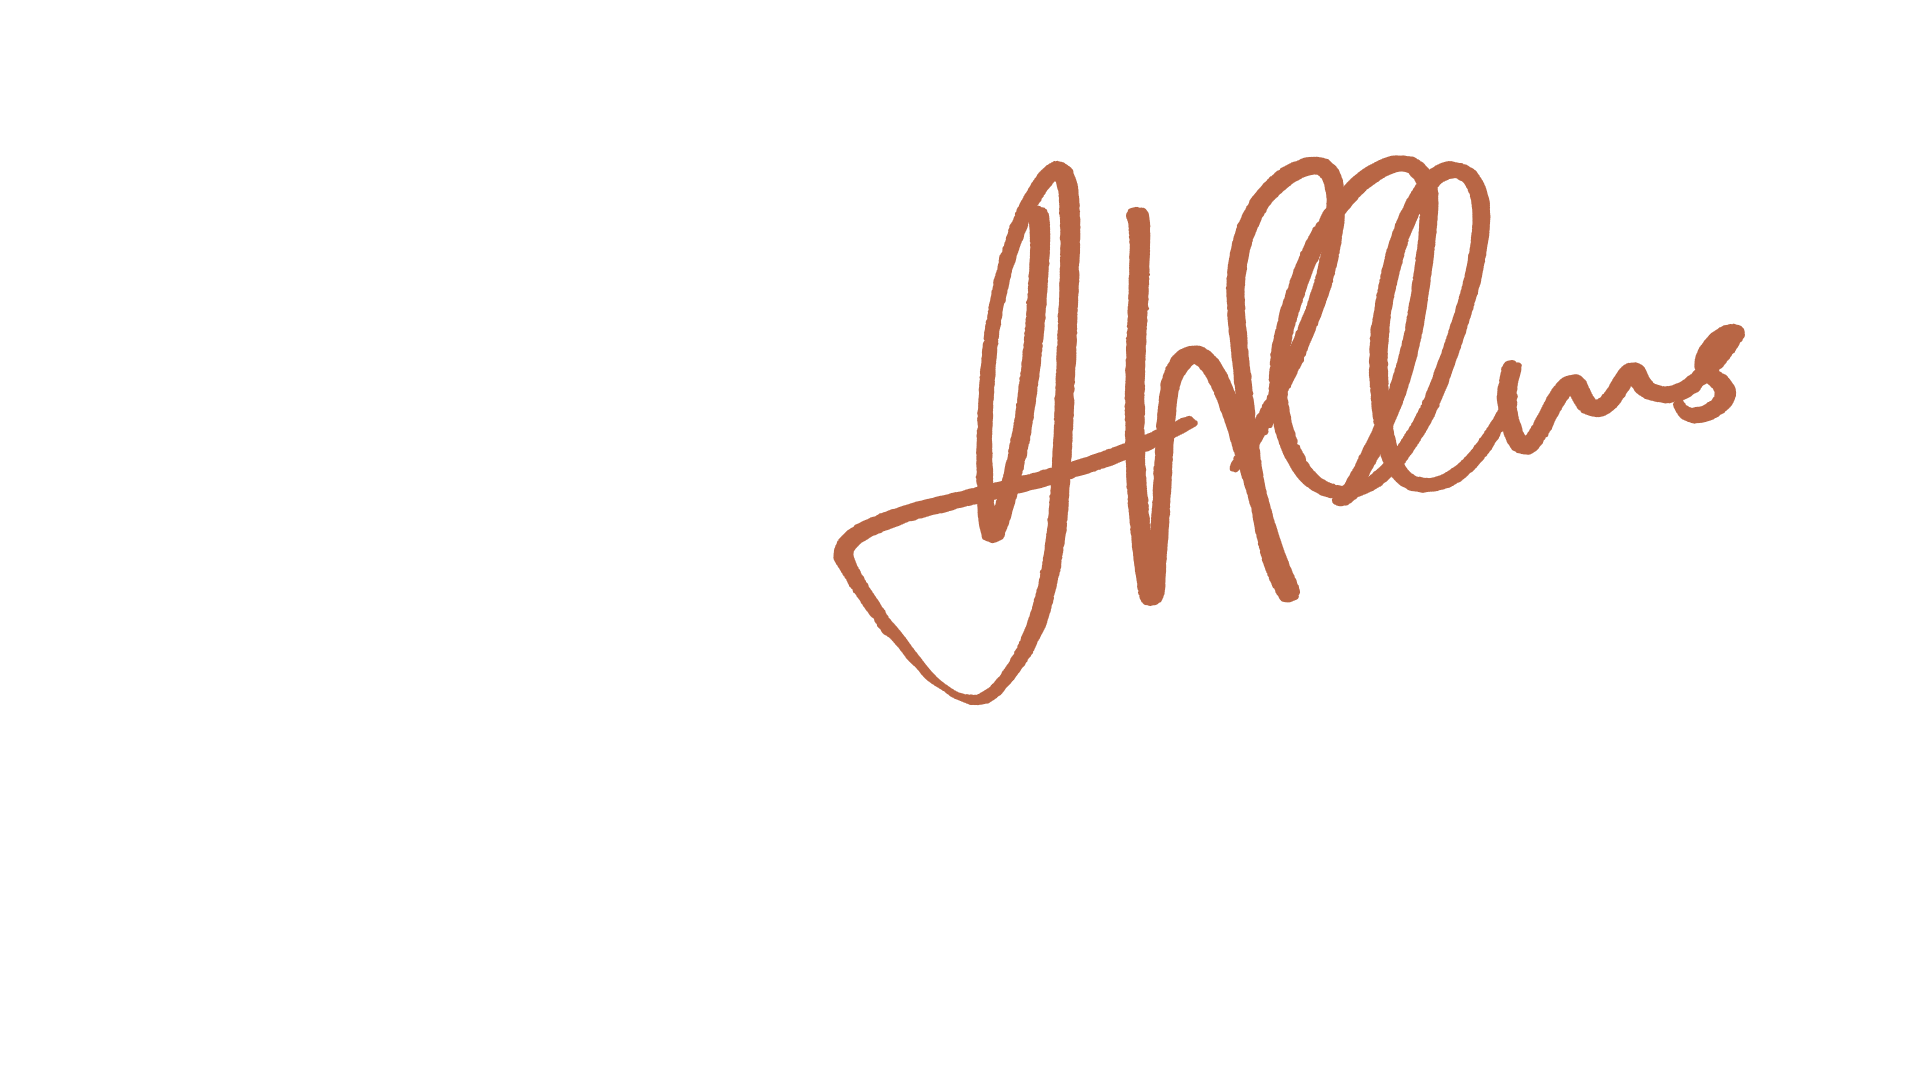 Luke Williams